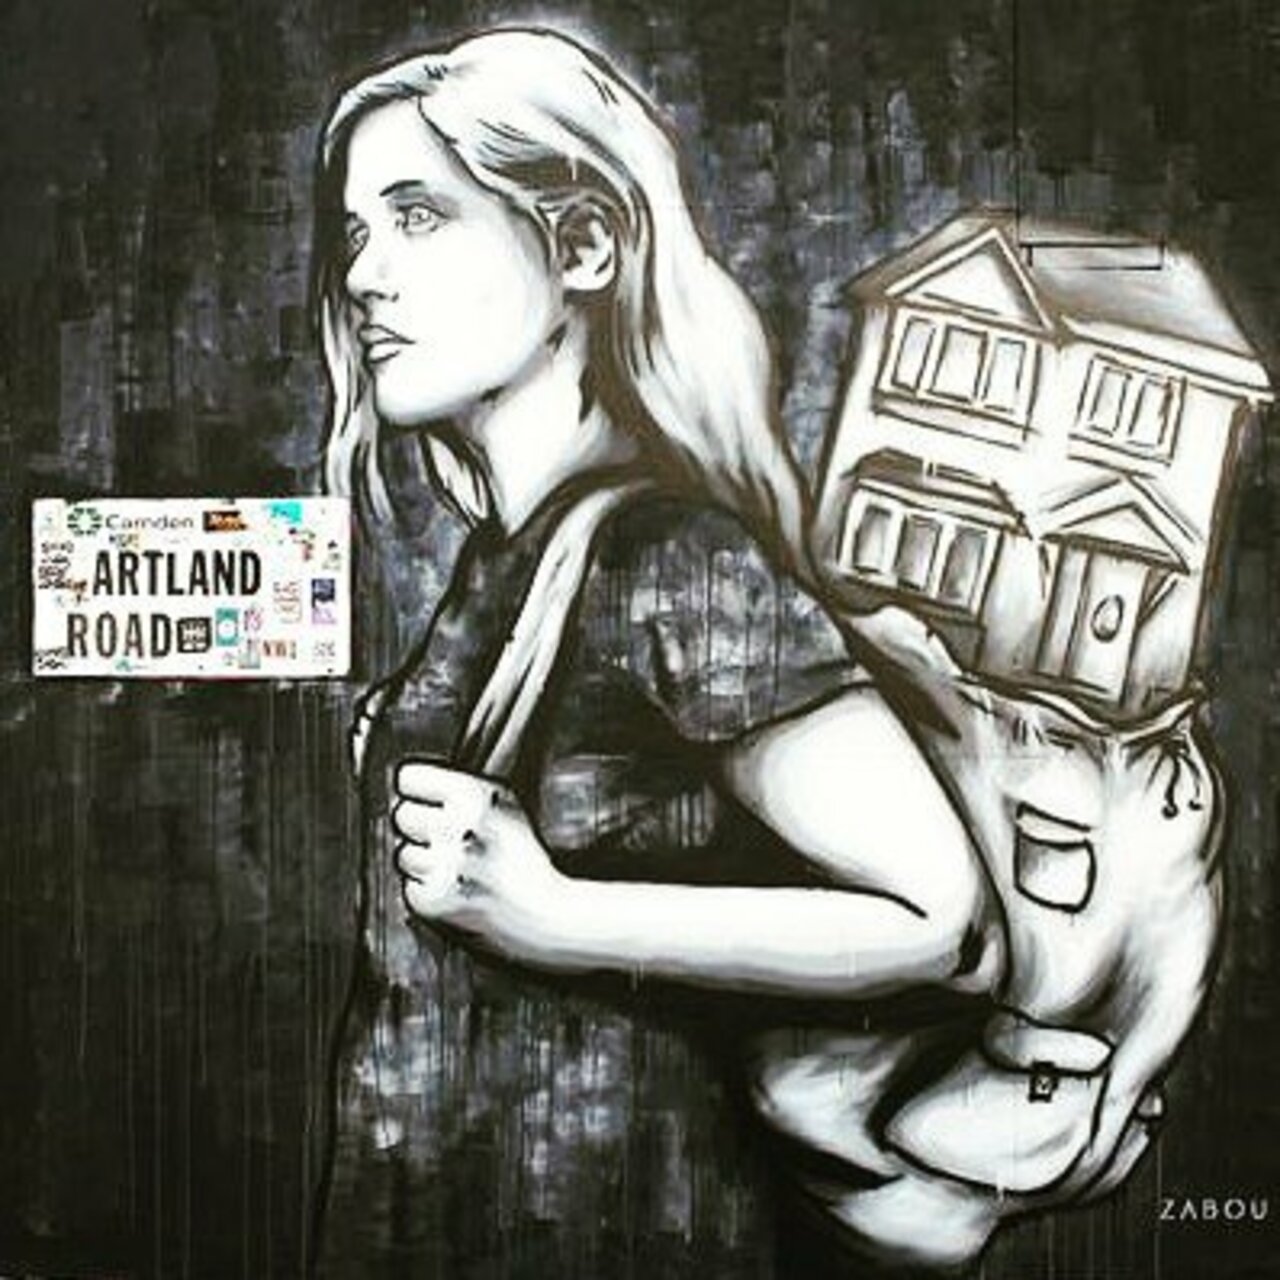 StArtEverywhere: #zabouartist #streetart #art #graffiti #wallart #urbanart #zabou #londonstreetart #paris #streeta… https://t.co/pAWXRTVyHB